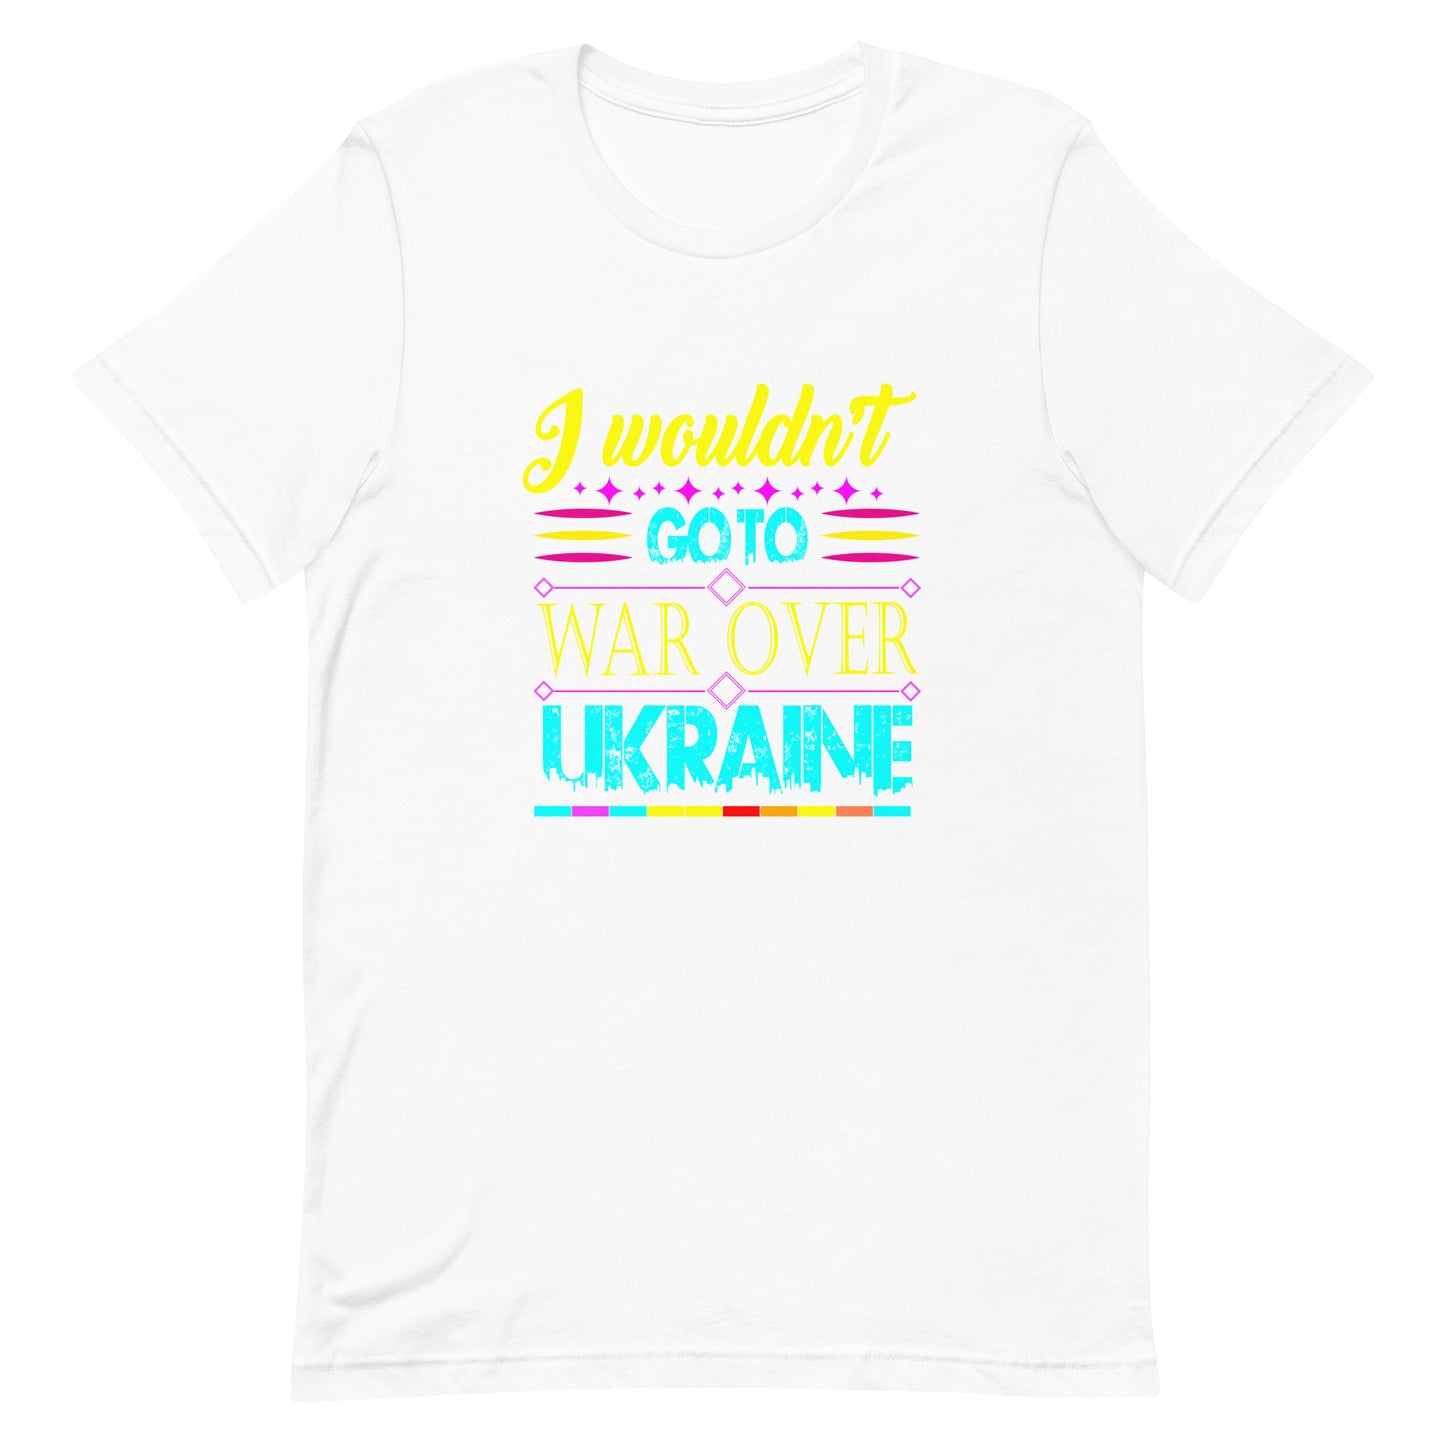 I wouldn't go to war over Ukraine | Unisex t-shirt